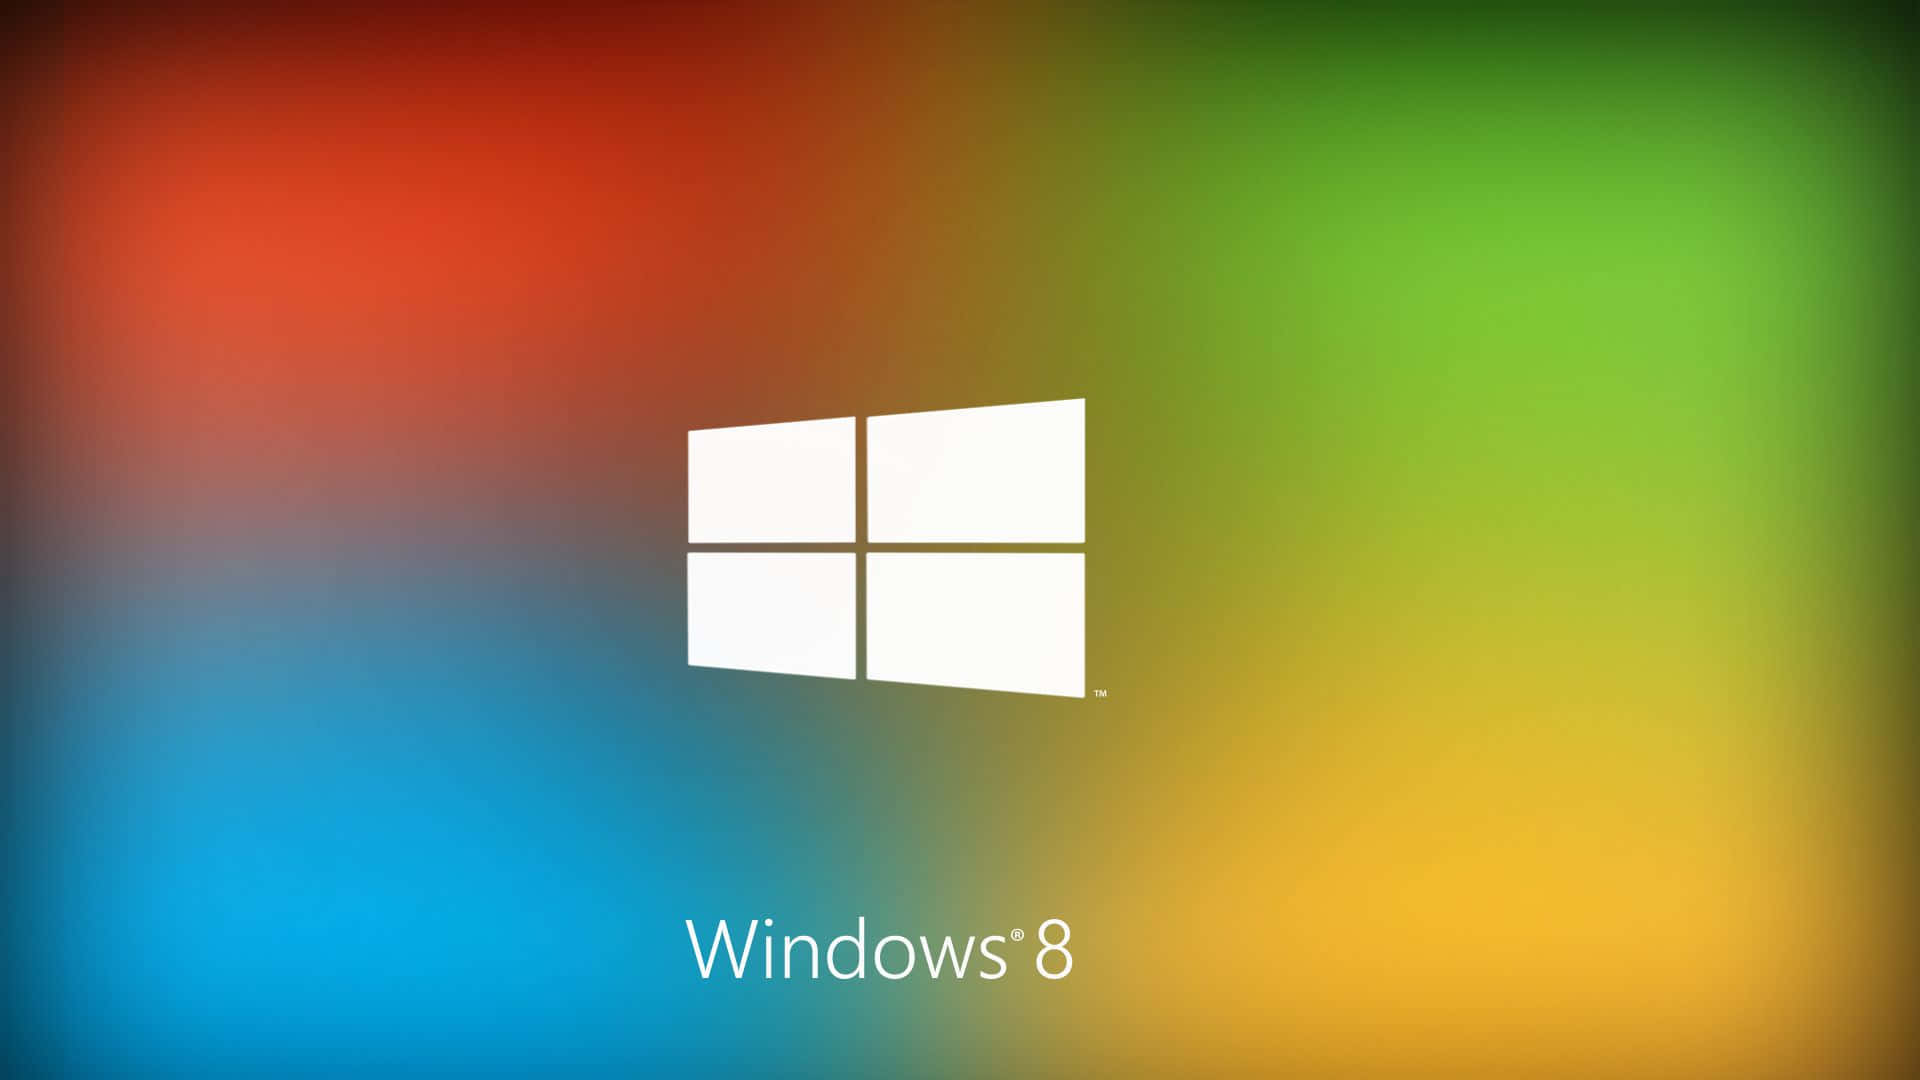 Stunning Windows 8 Abstract Background